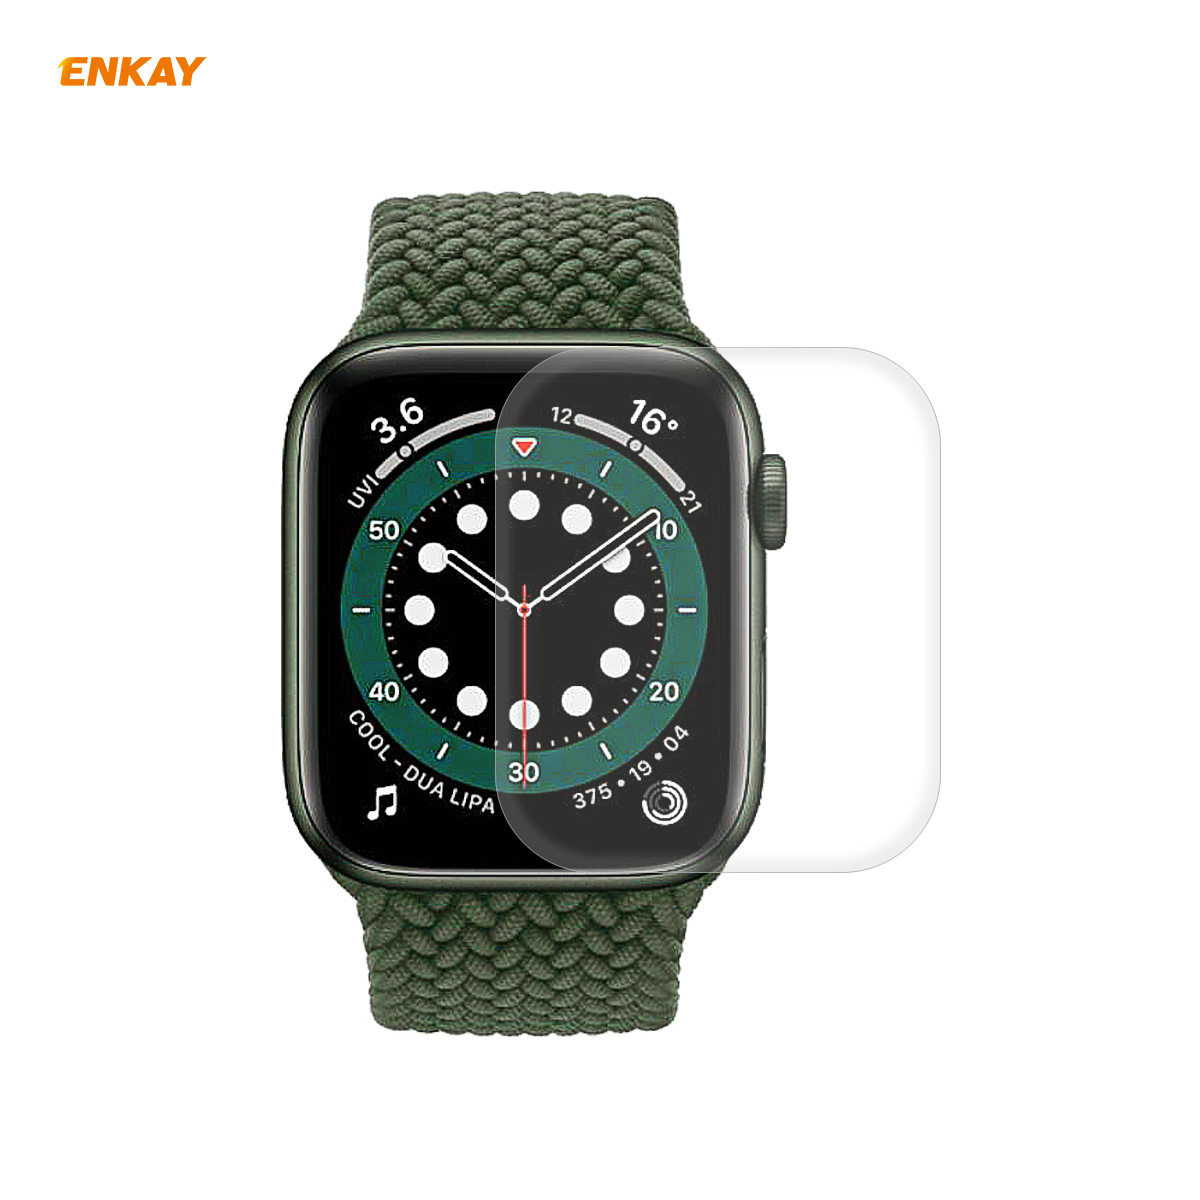 Enkay-12510PCS-High-Definition-3D-Curved-Edge-Hot-Blending-Full-Coverage-Anti-Scratch-Soft-PET-Watch-1751554-1